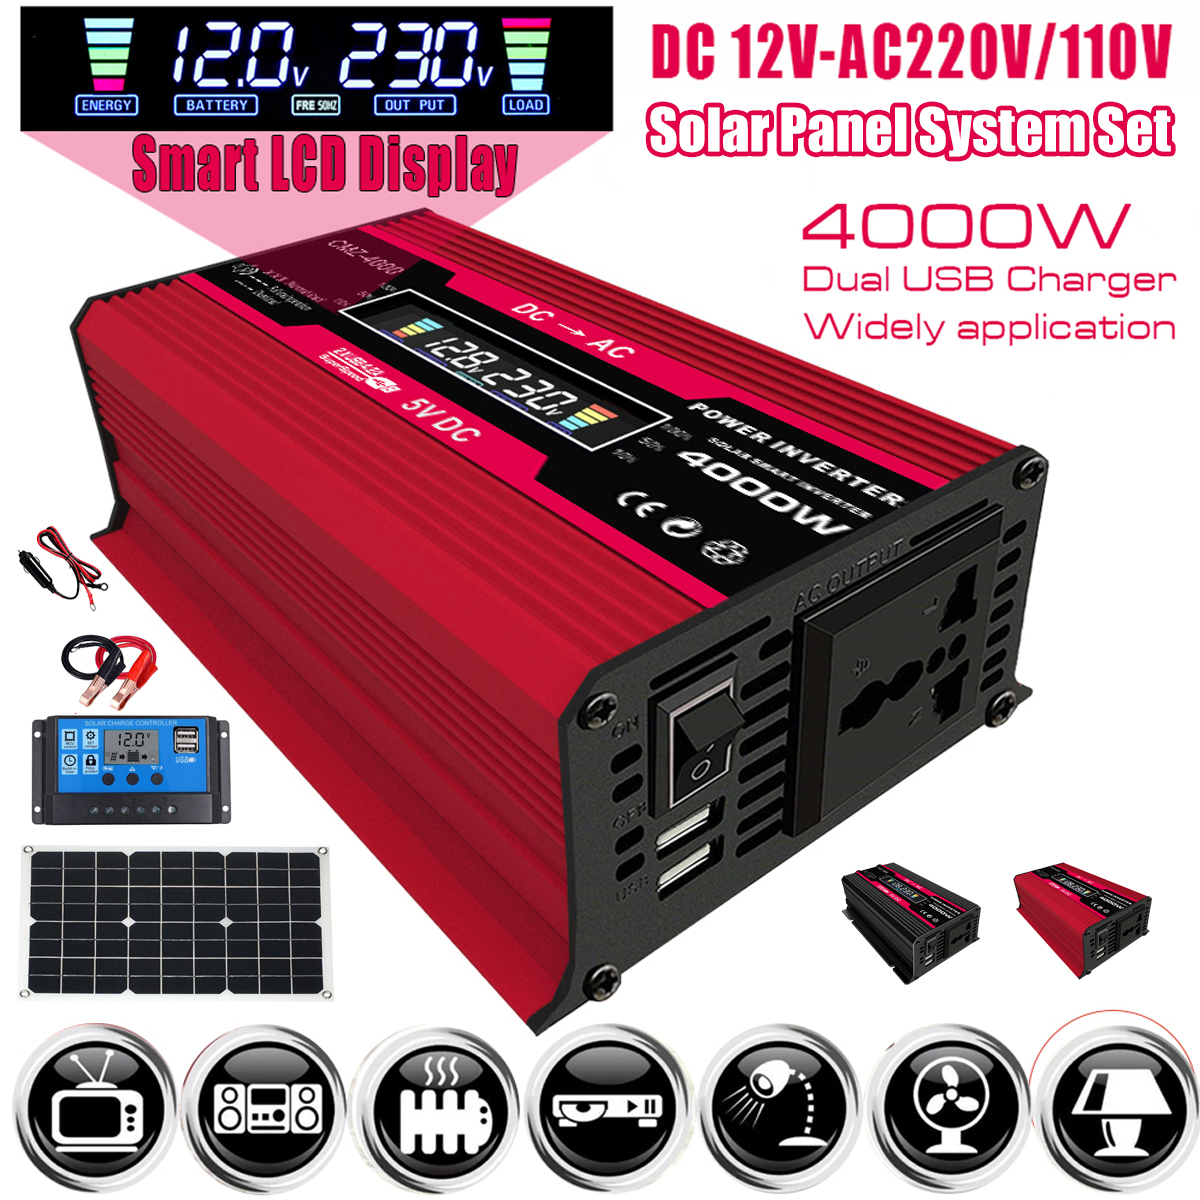 Solar-Power-System-Set-18W-Solar-Panel-300W-Power-Inverter-30A-Controller-Kit-Solar-Panel-Battery-Ch-1844953-2